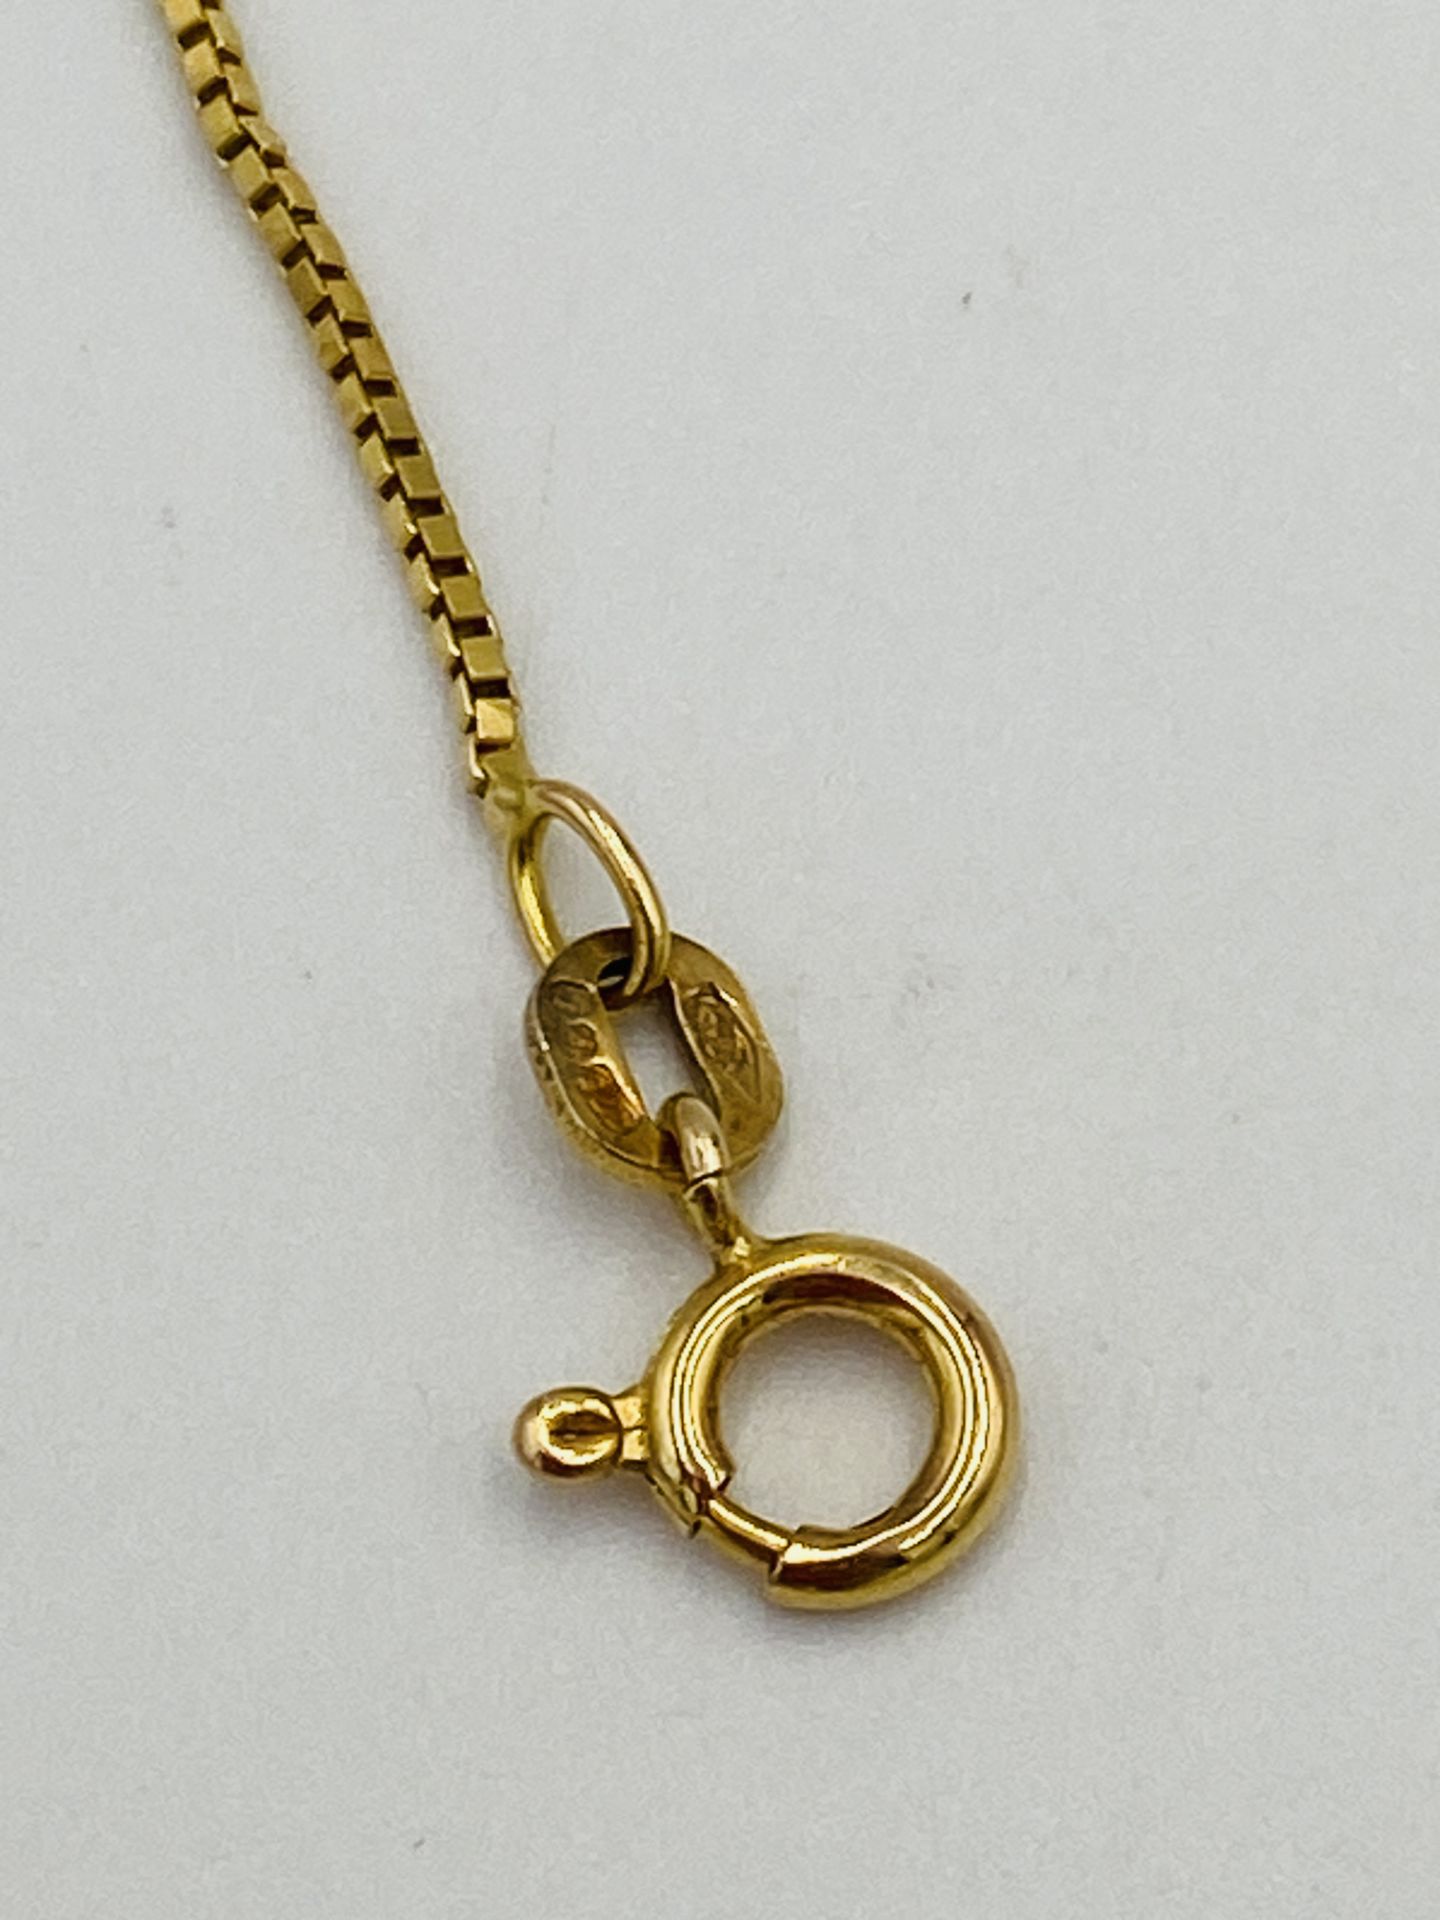 9ct fine gold chain - Image 2 of 4